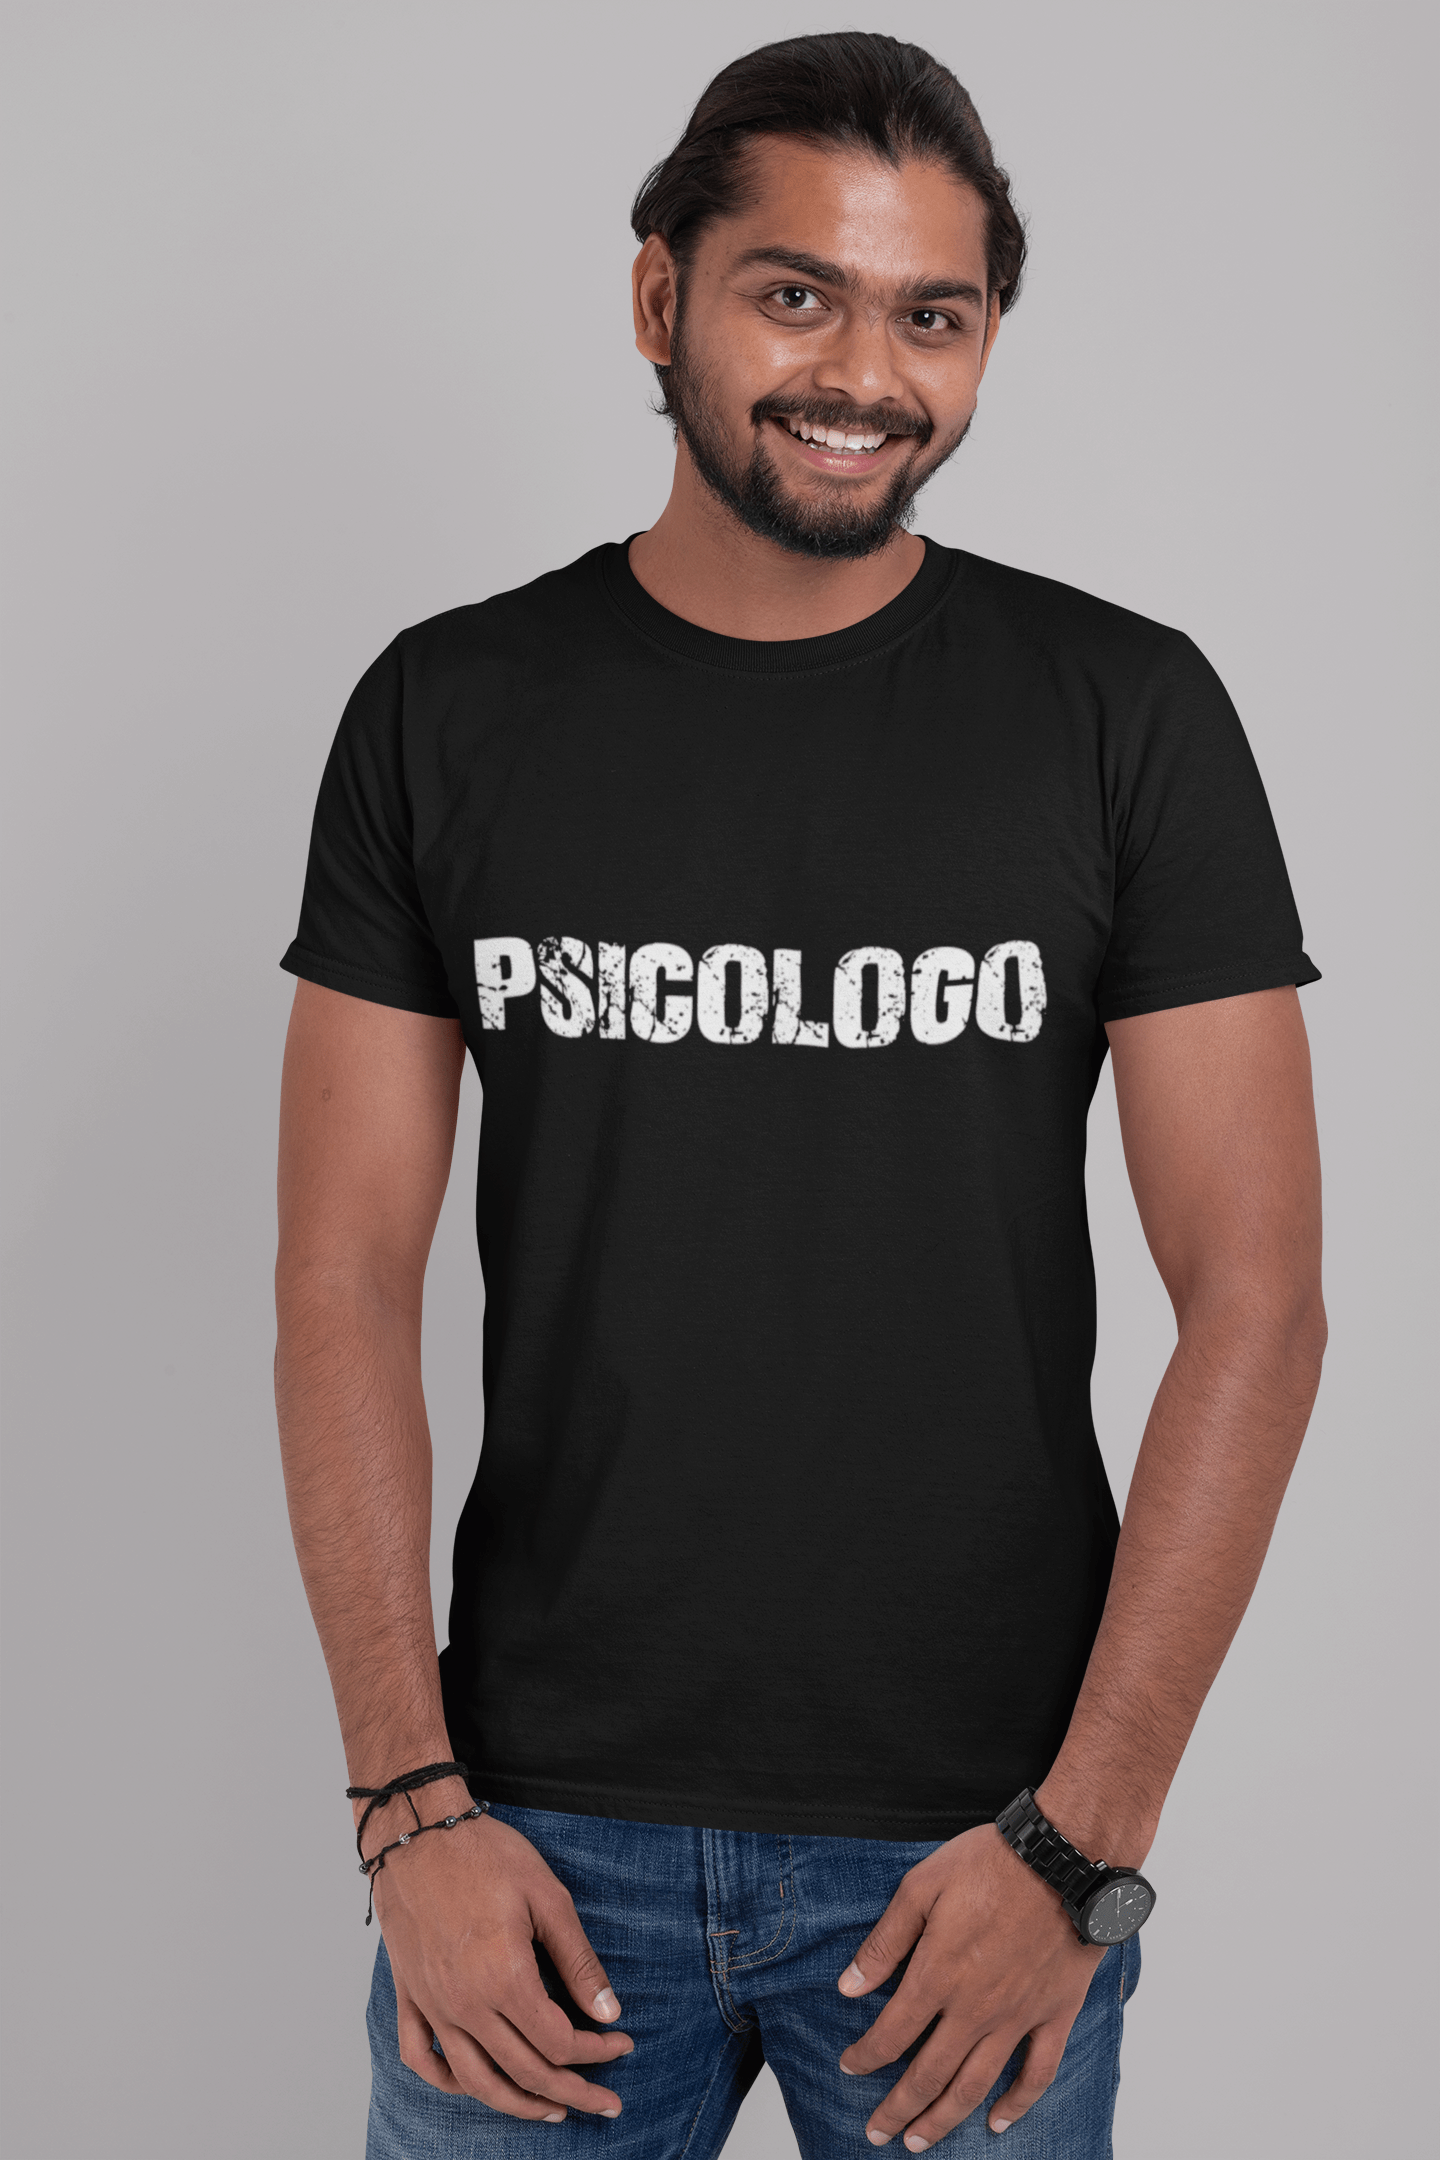 psicologo, Men's Short Sleeve Round Neck T-shirt 00017